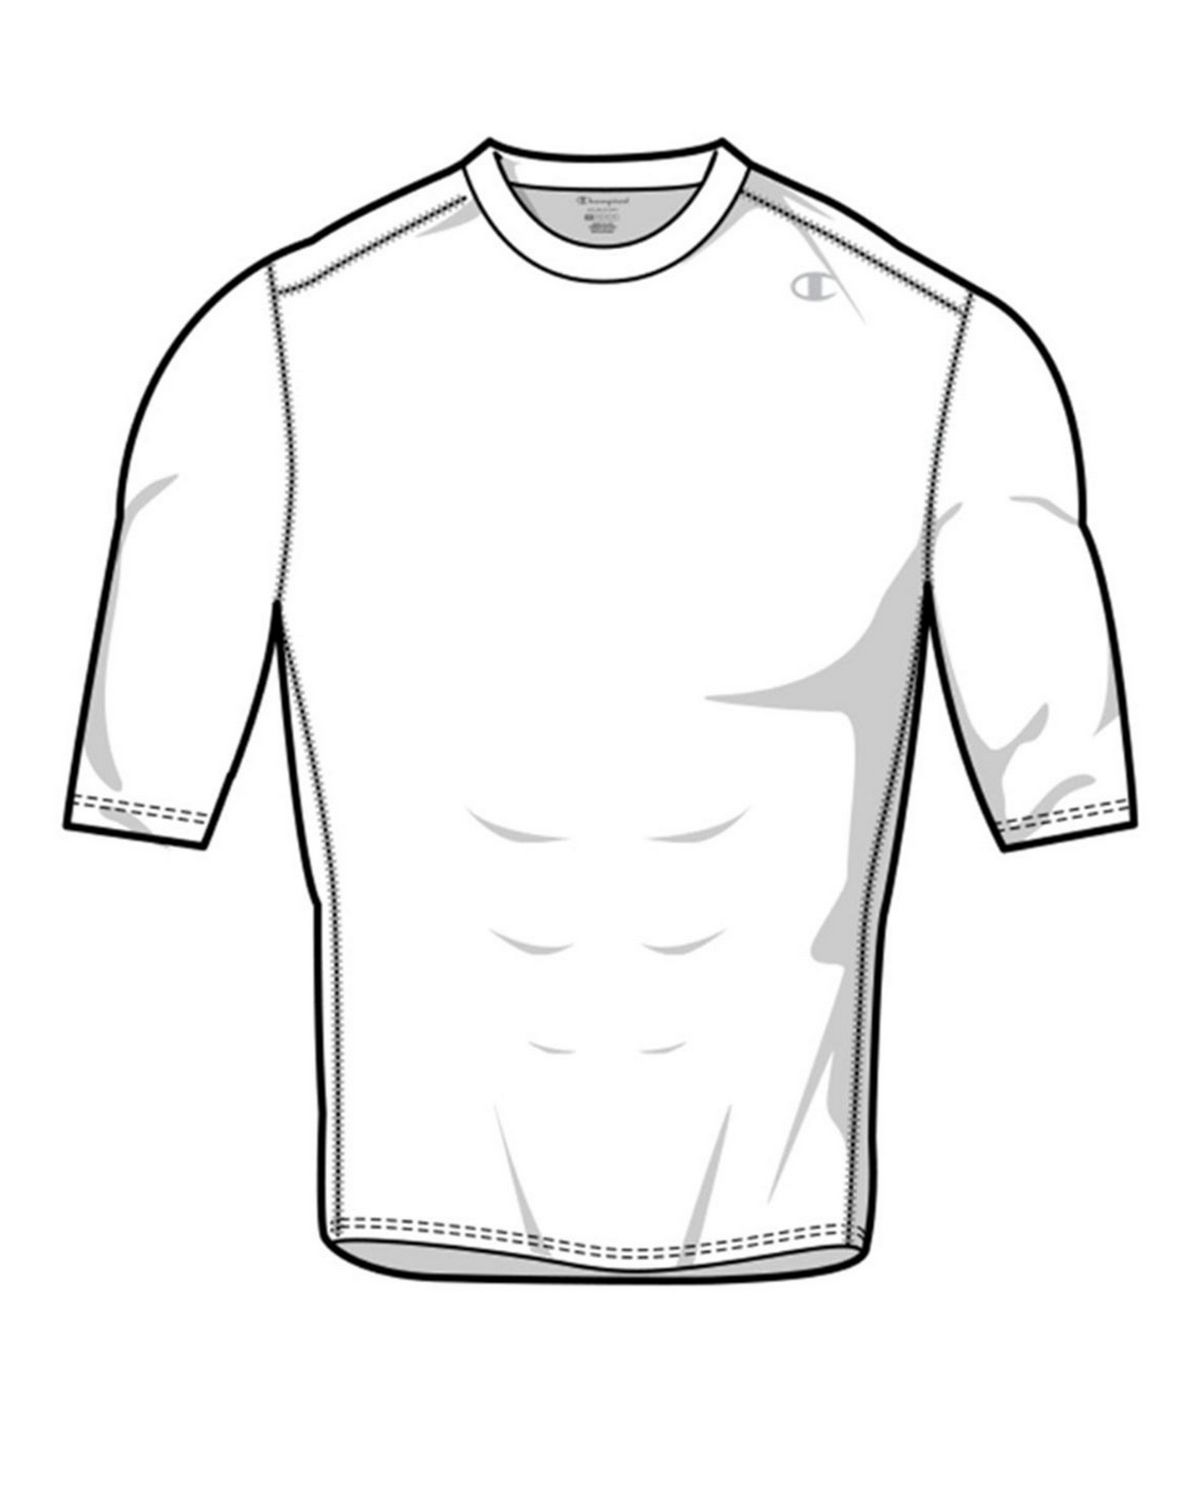 champion compression shirt long sleeve